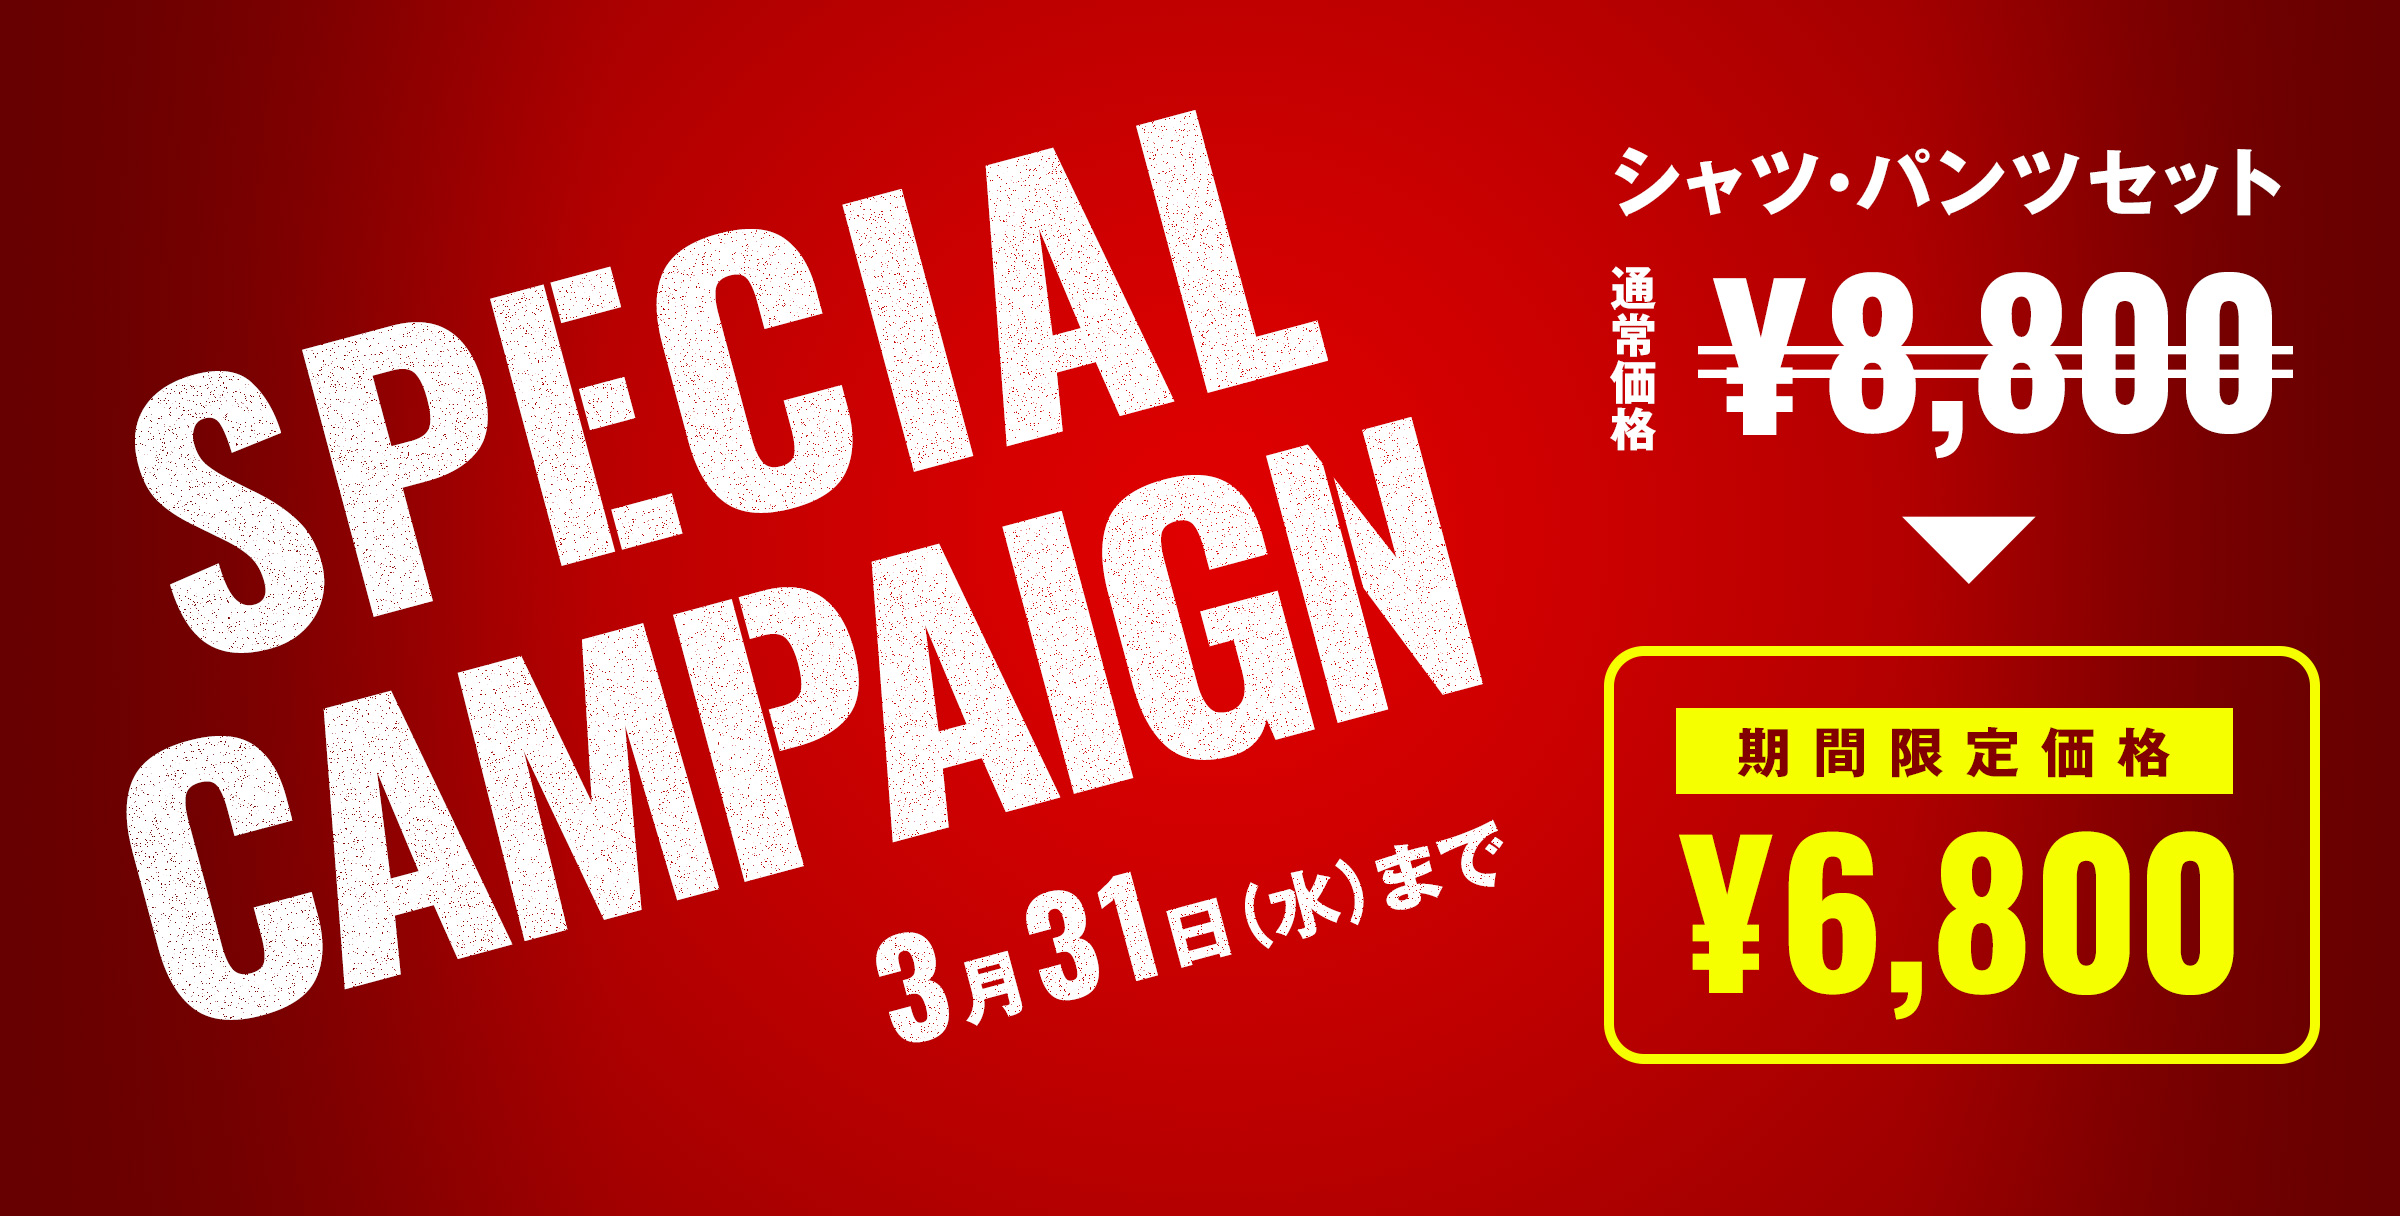 SPECIAL CAMPAIGN シャツ・パンツセットが期間限定価格¥6,800